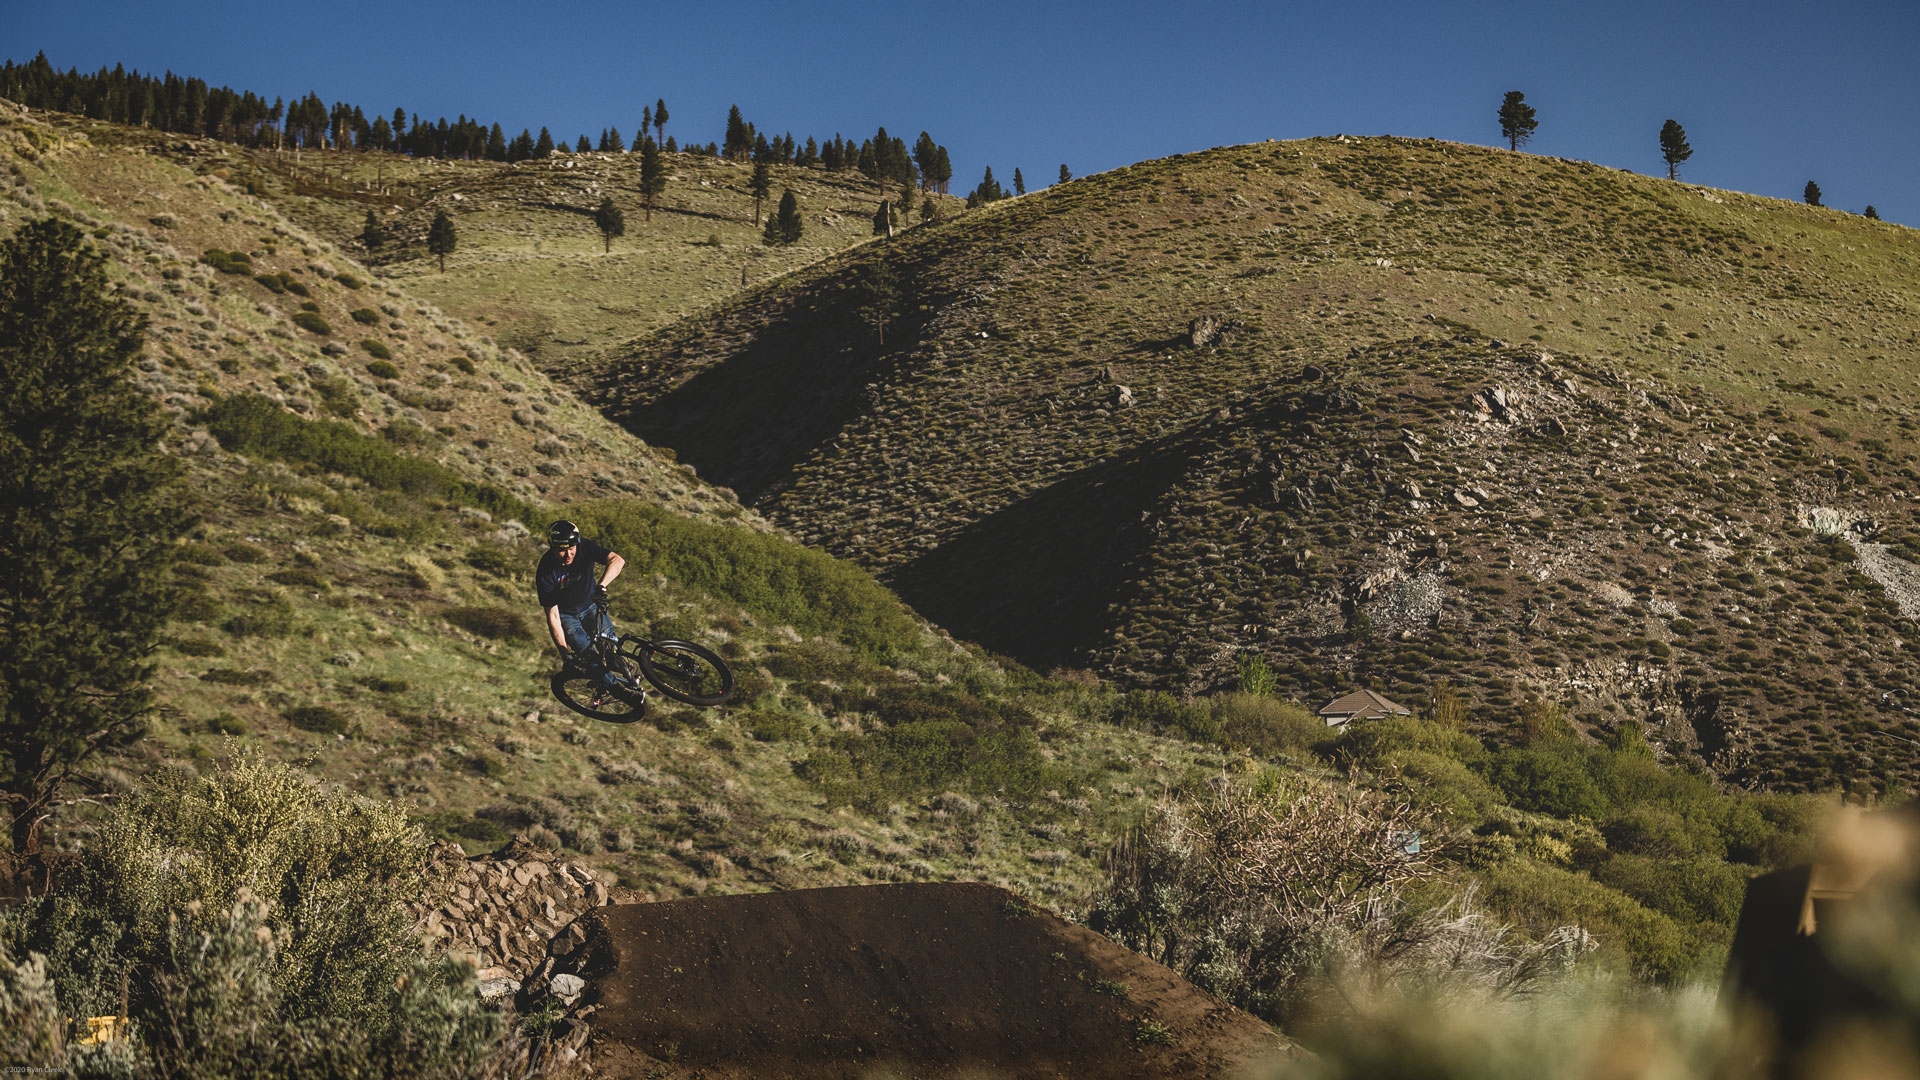 Greg’s backyard jump lines nestle up to the surrounding mountainside. Photo: Ryan Cleek